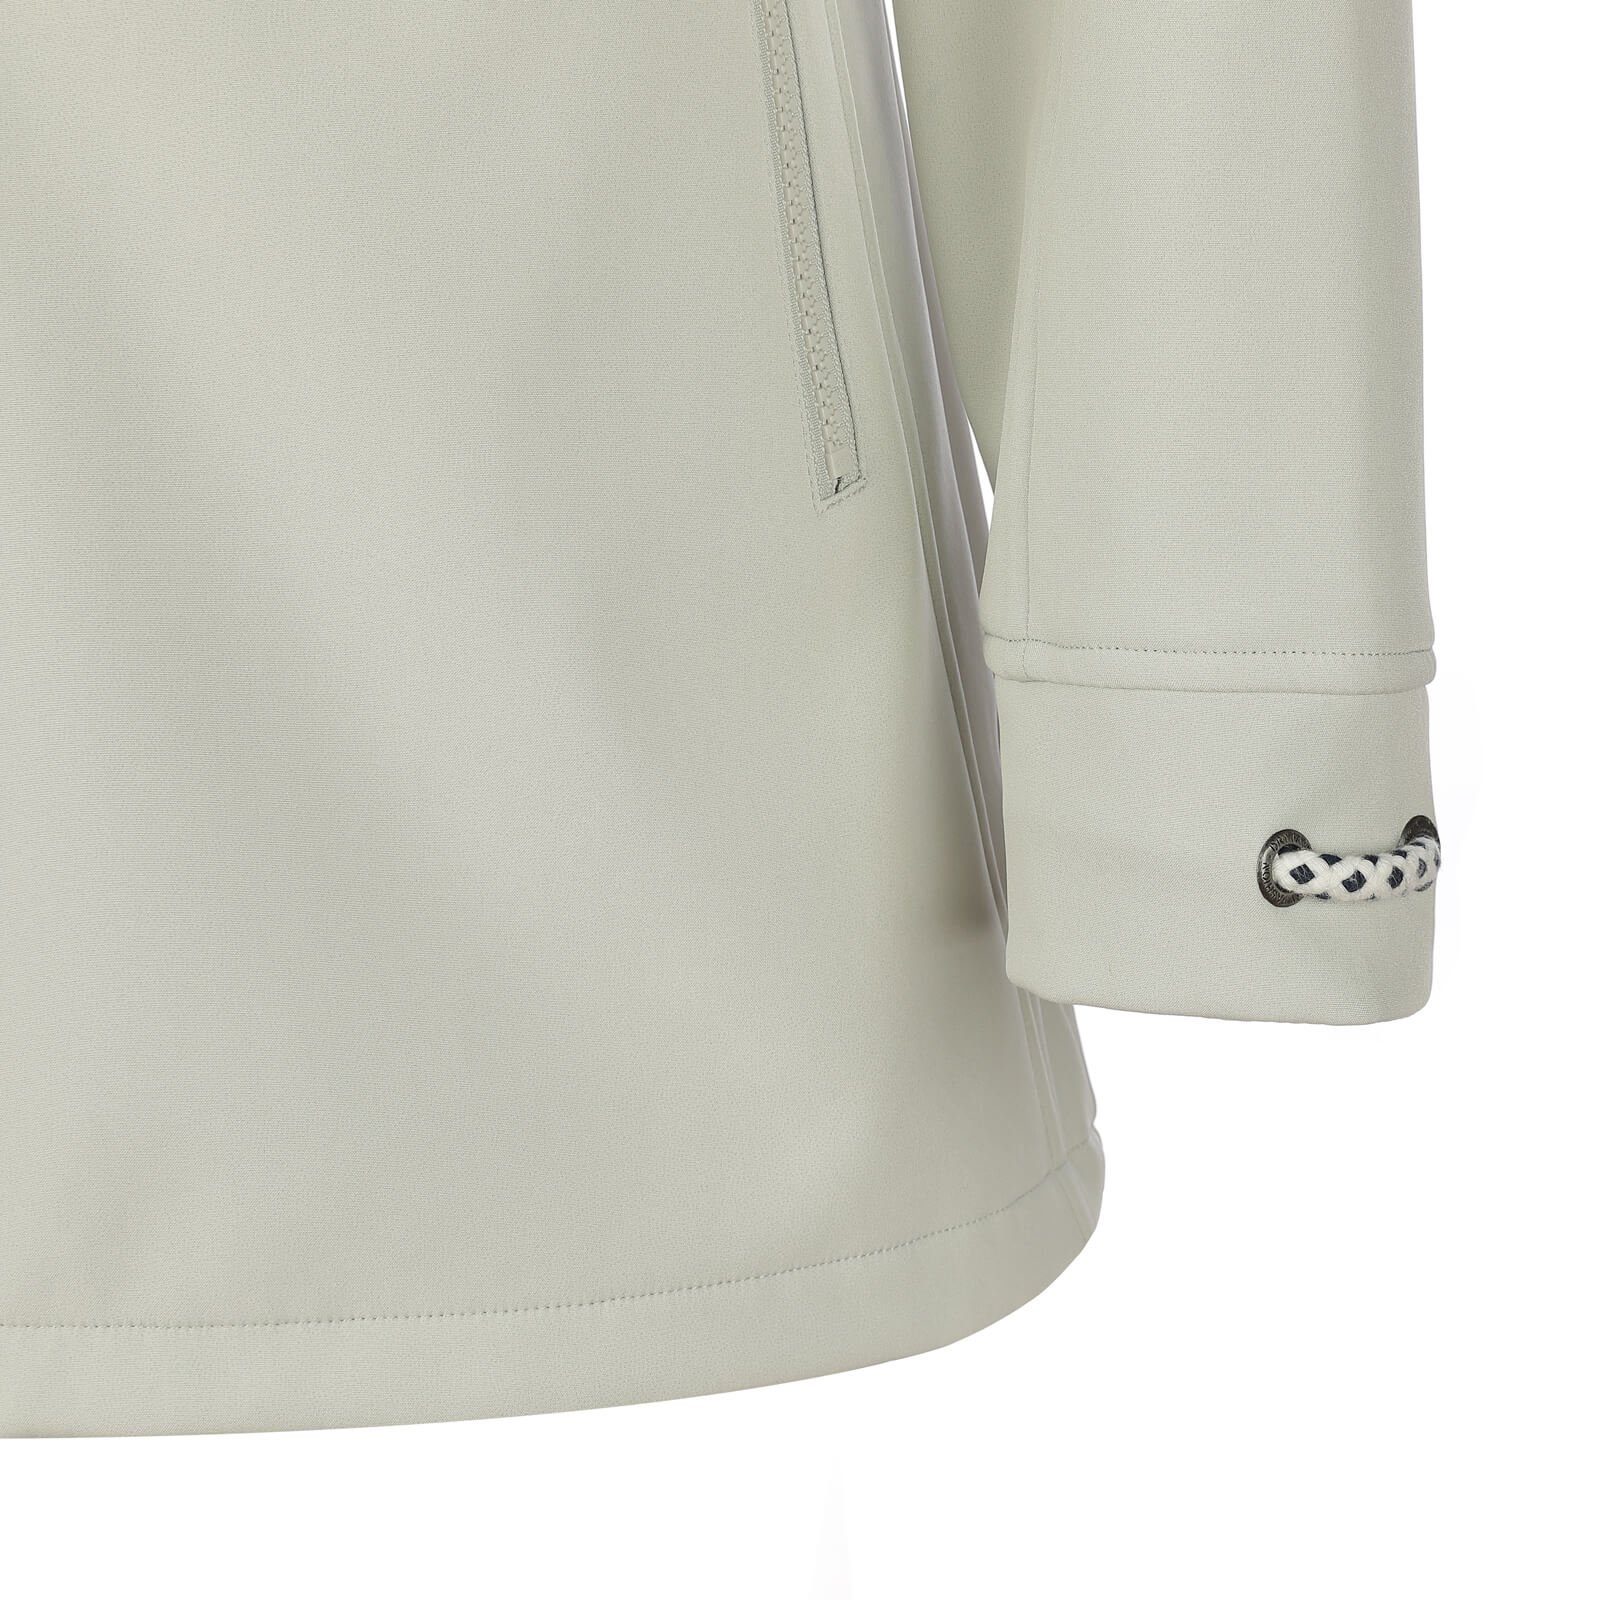 Dry Fashion Softshellmantel Rerik - Softshell Damen Mantel Outdoor-Jacke cremeweiß Softshelljacke